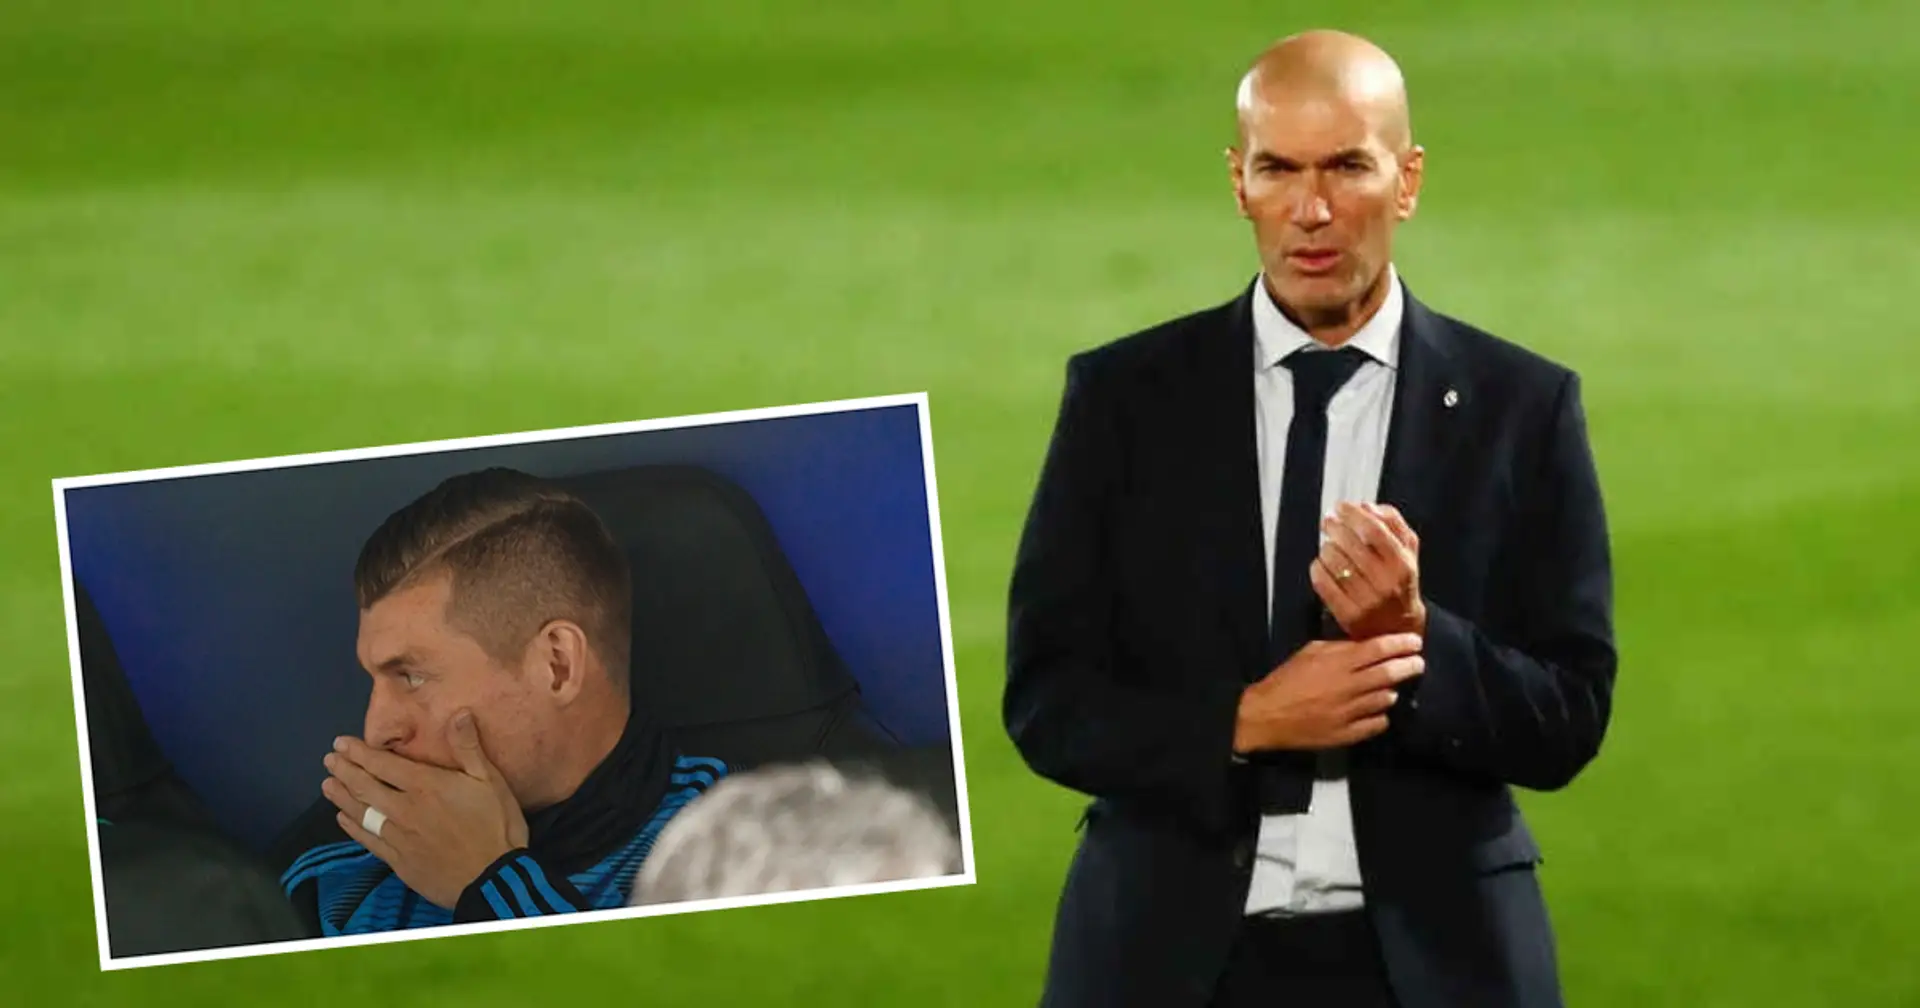 'No podemos hacer tonterías': Zidane confirma que Kroos no jugó porque arrastraba molestias